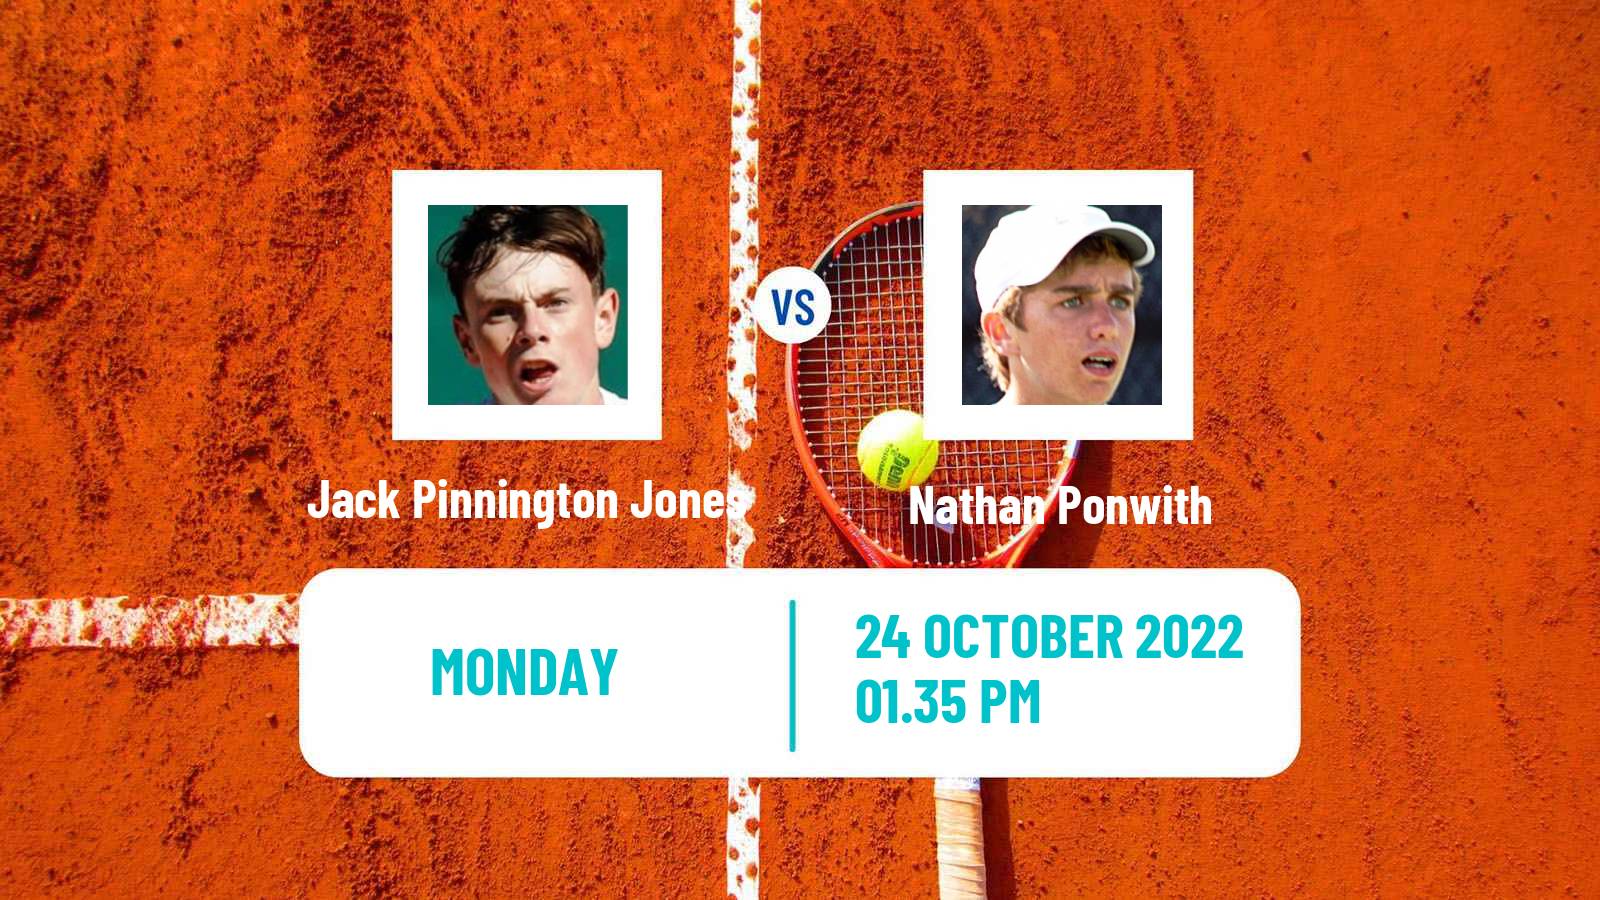 Tennis ATP Challenger Jack Pinnington Jones - Nathan Ponwith